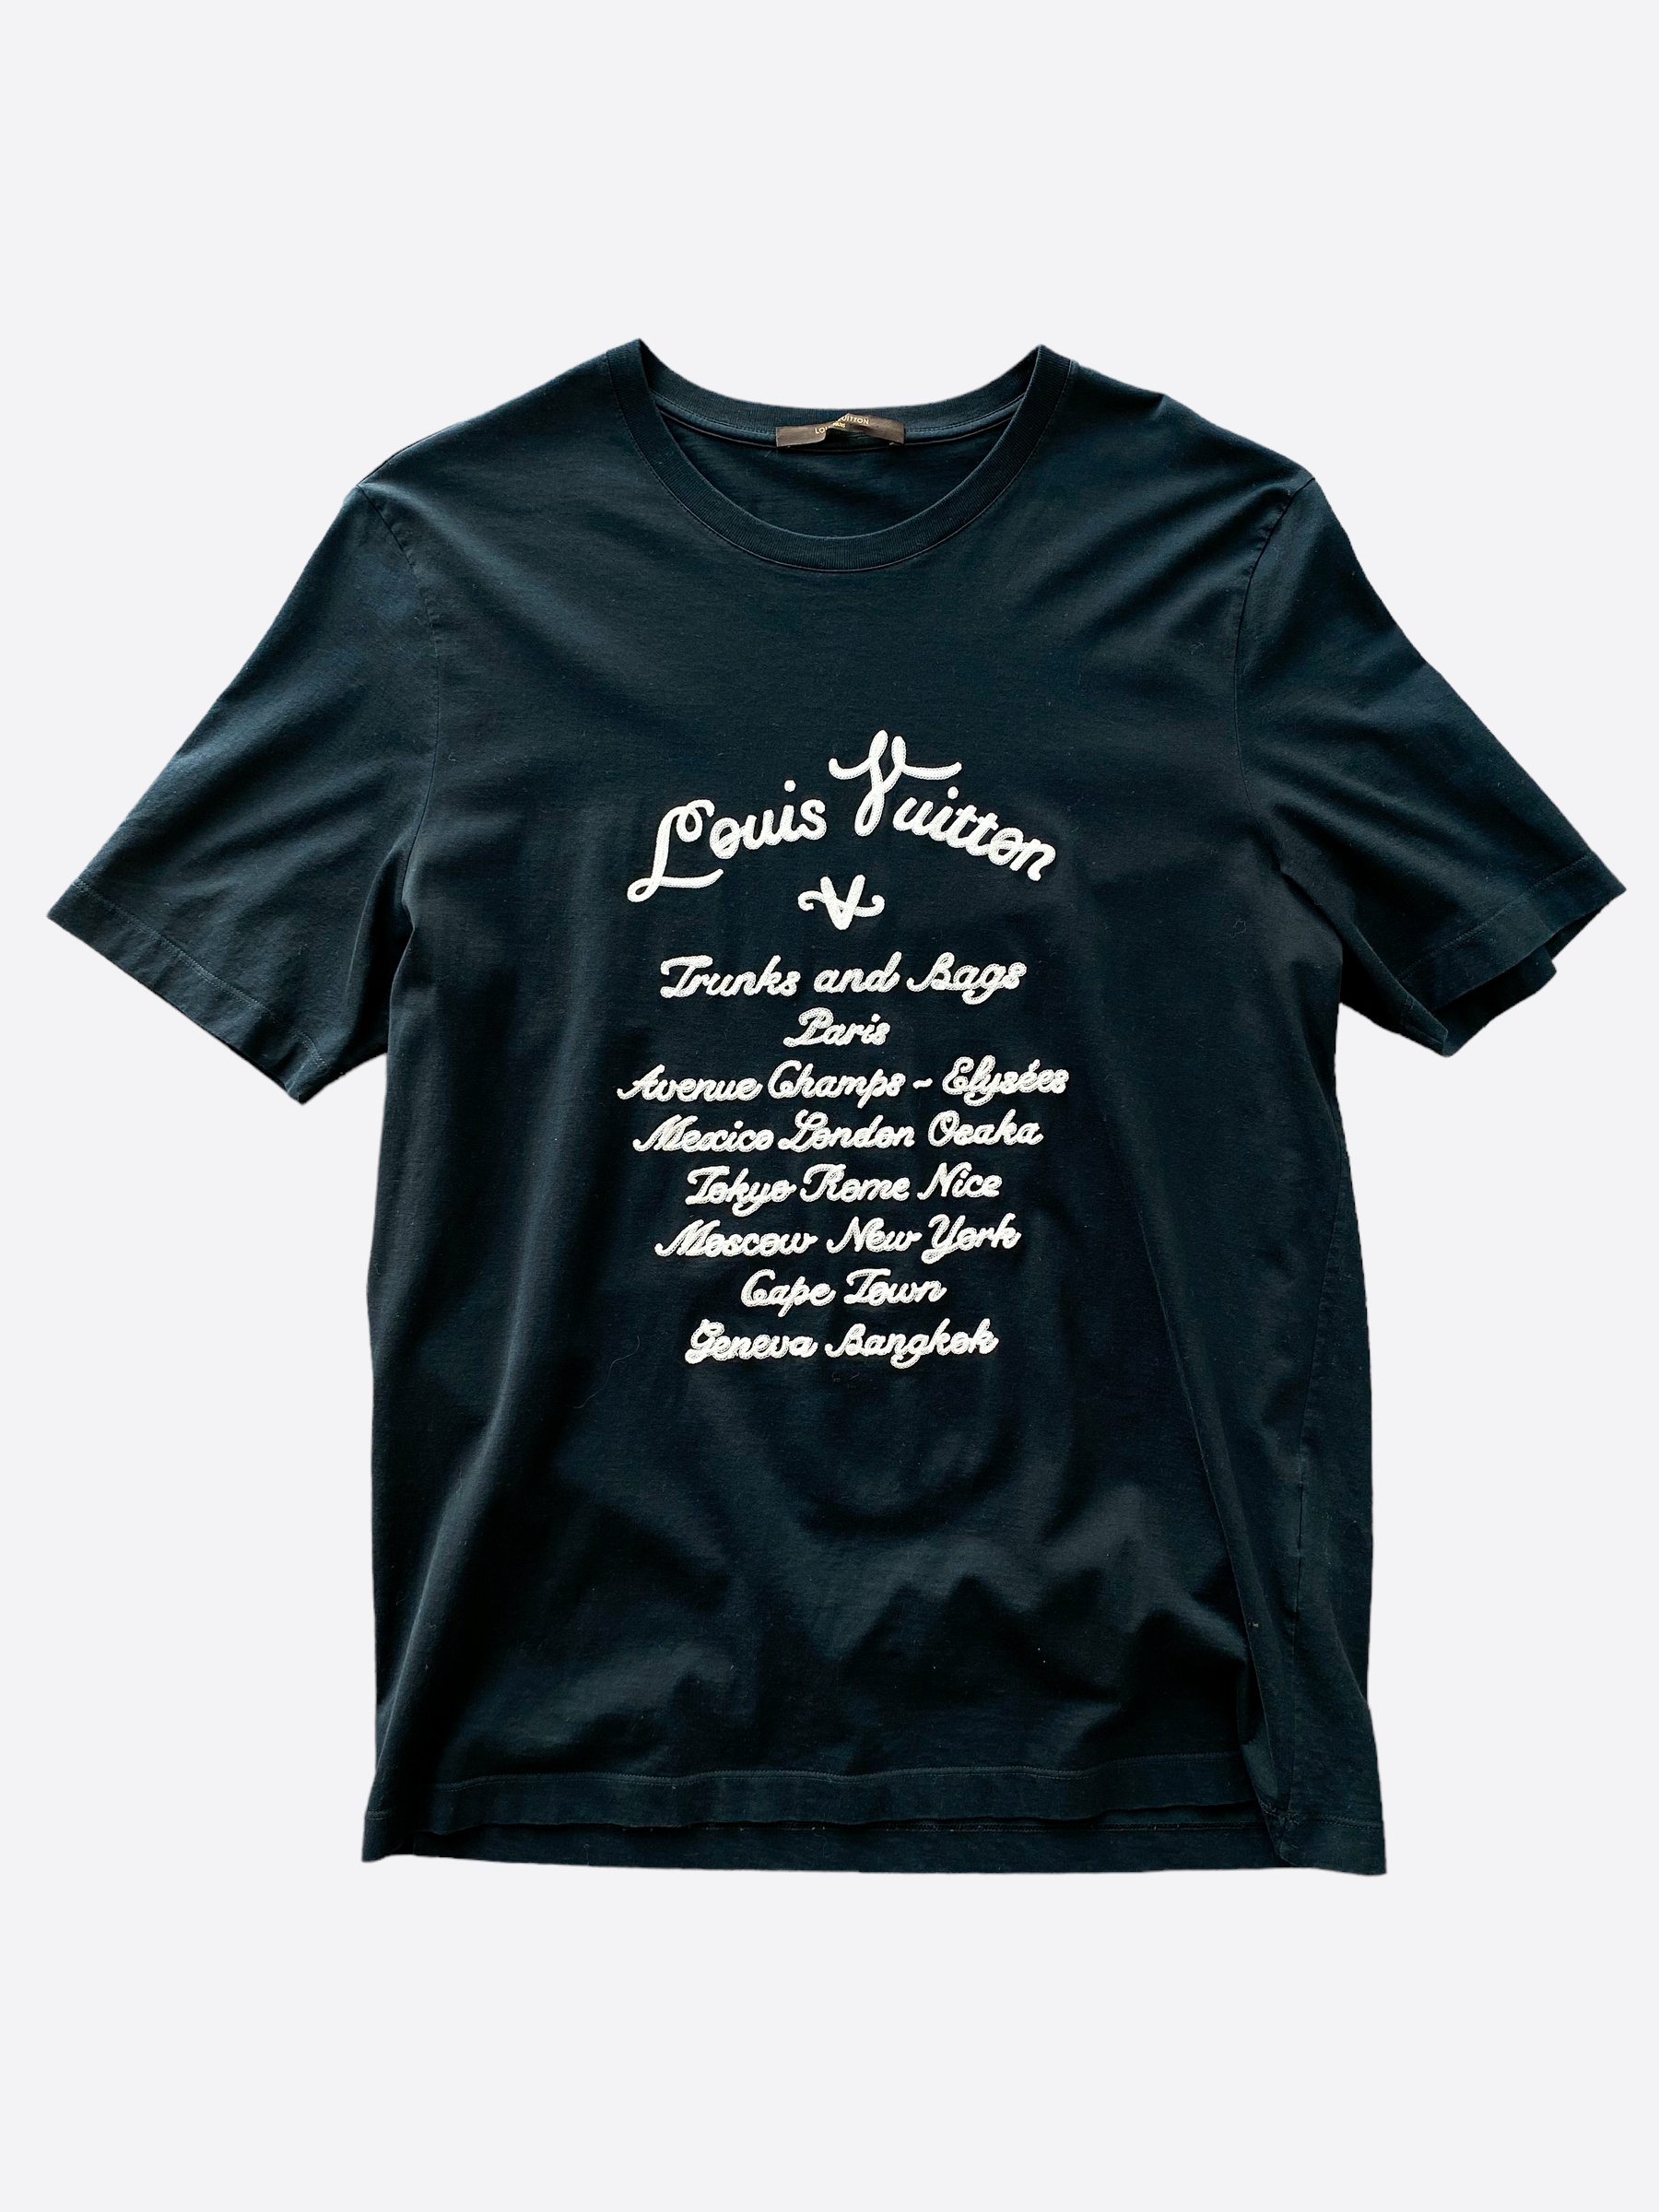 Louis Vuitton Black Trunks And Bags T-Shirt